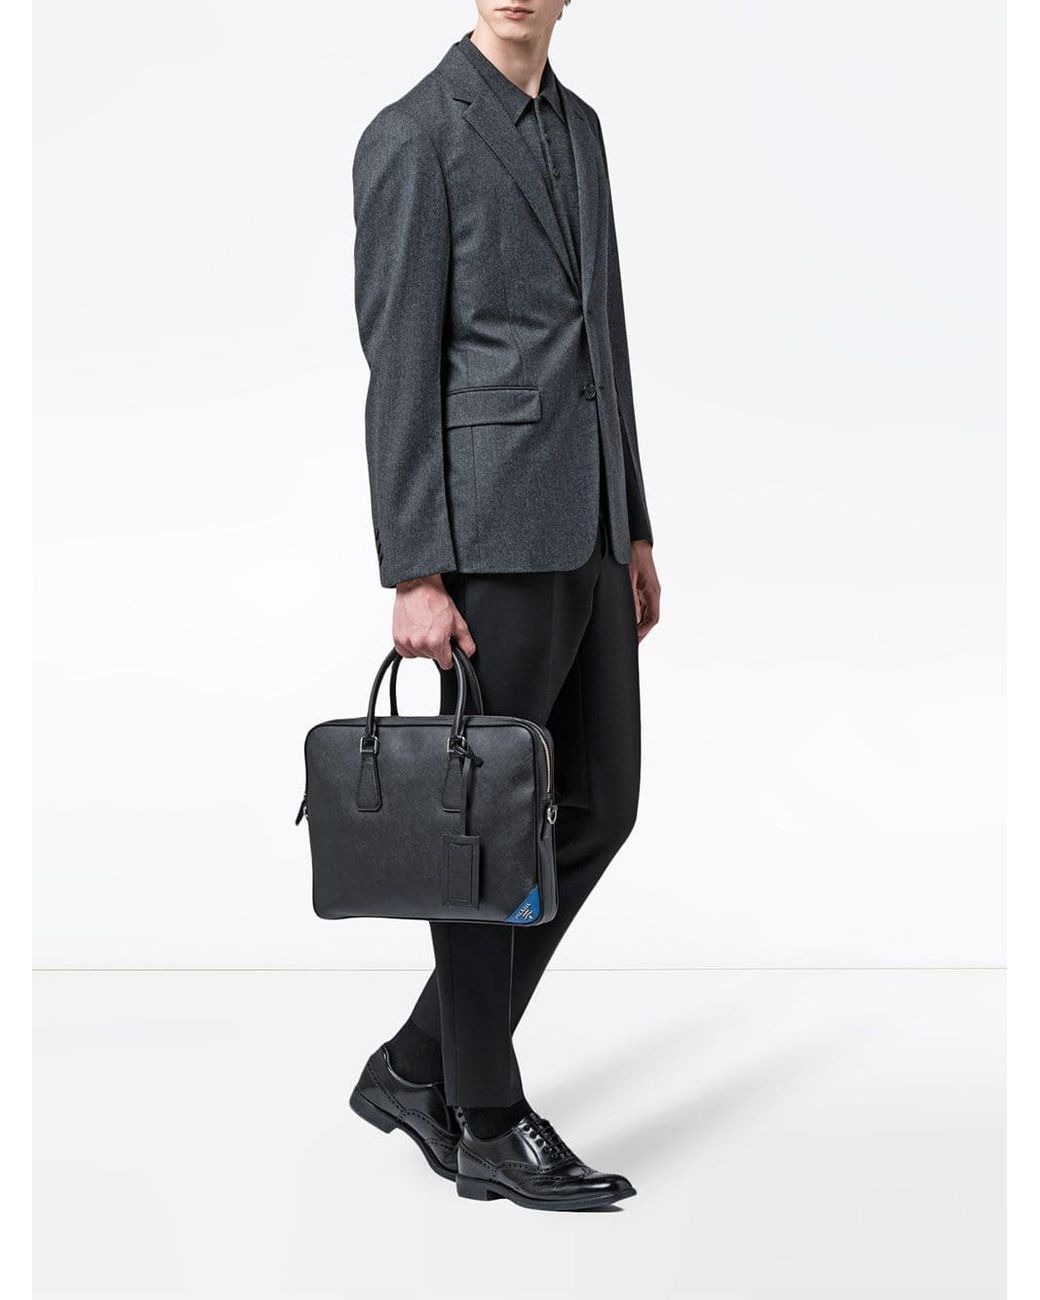 Prada Saffiano Laptop Bag in Black for Men | Lyst